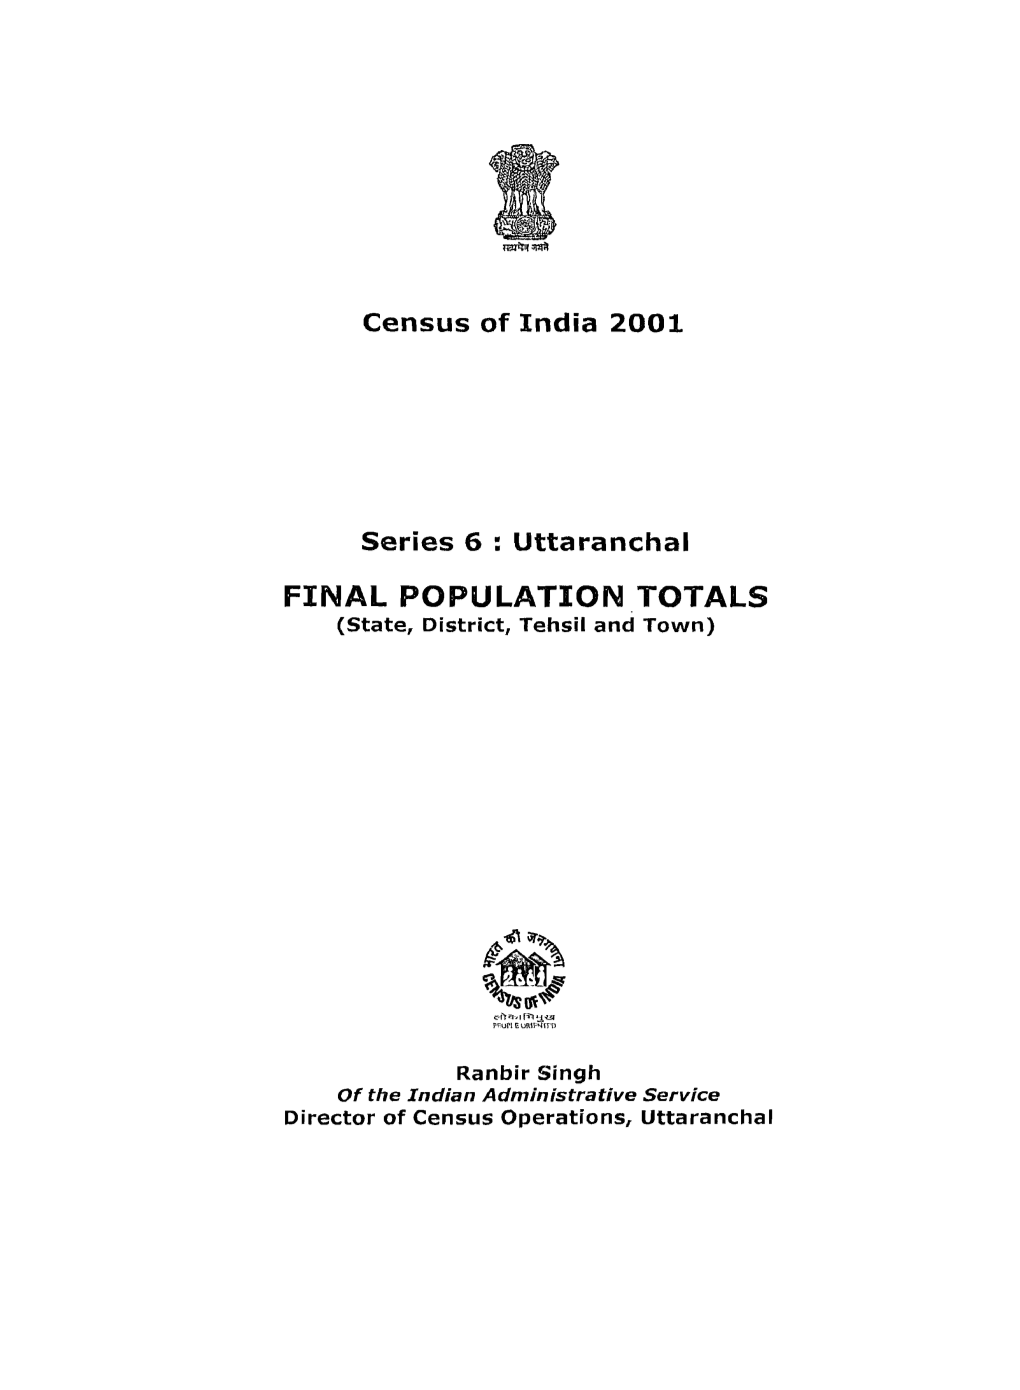 Final Population Totals, Series-6, Uttaranchal